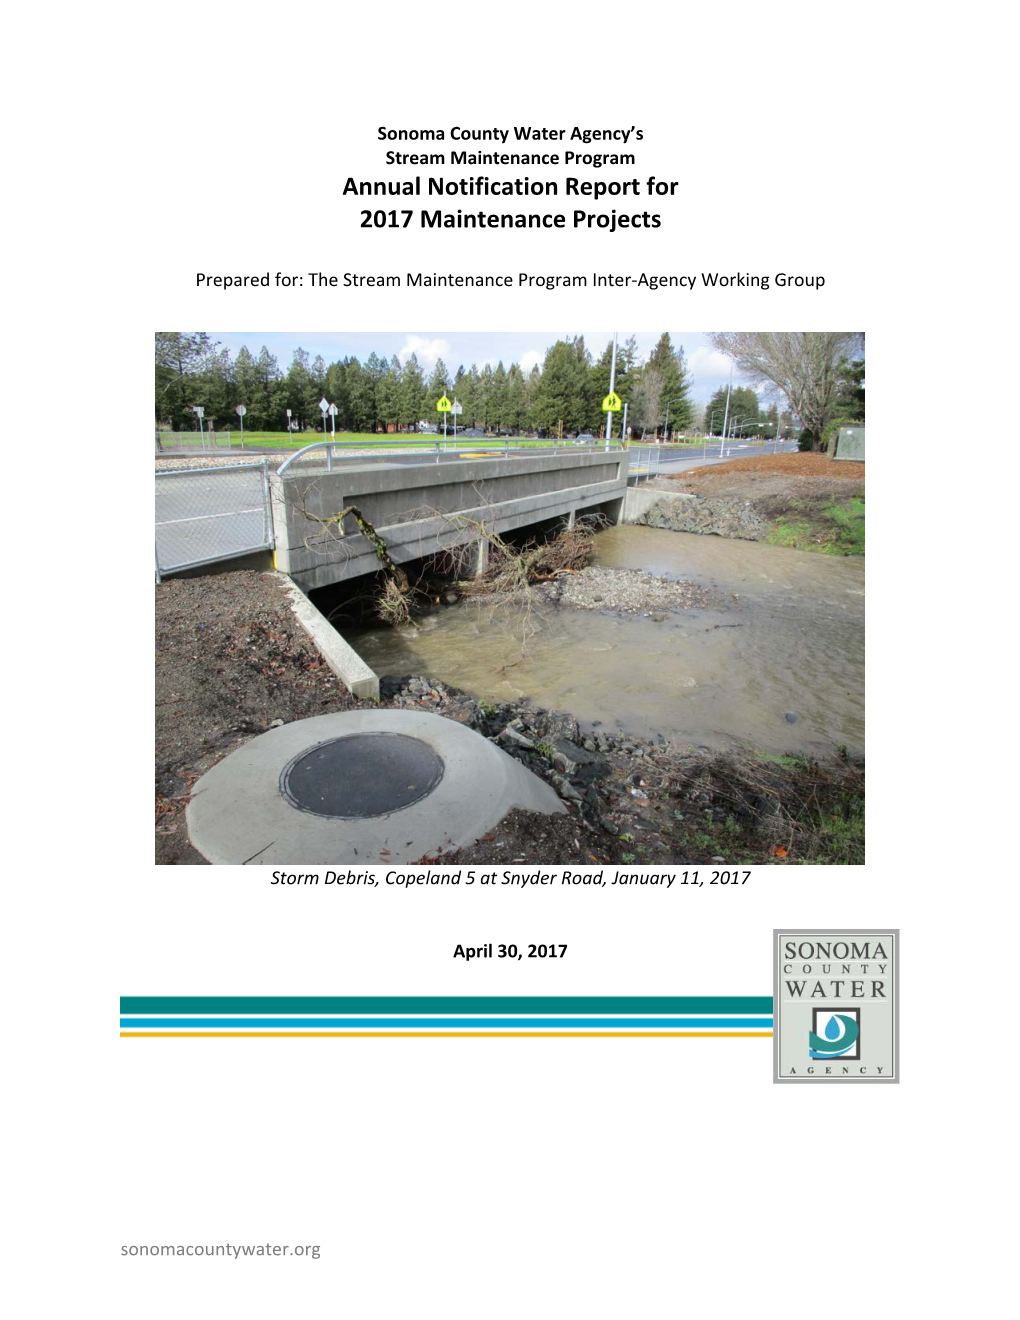 Sonoma County Water Agency's Stream Maintenance Program